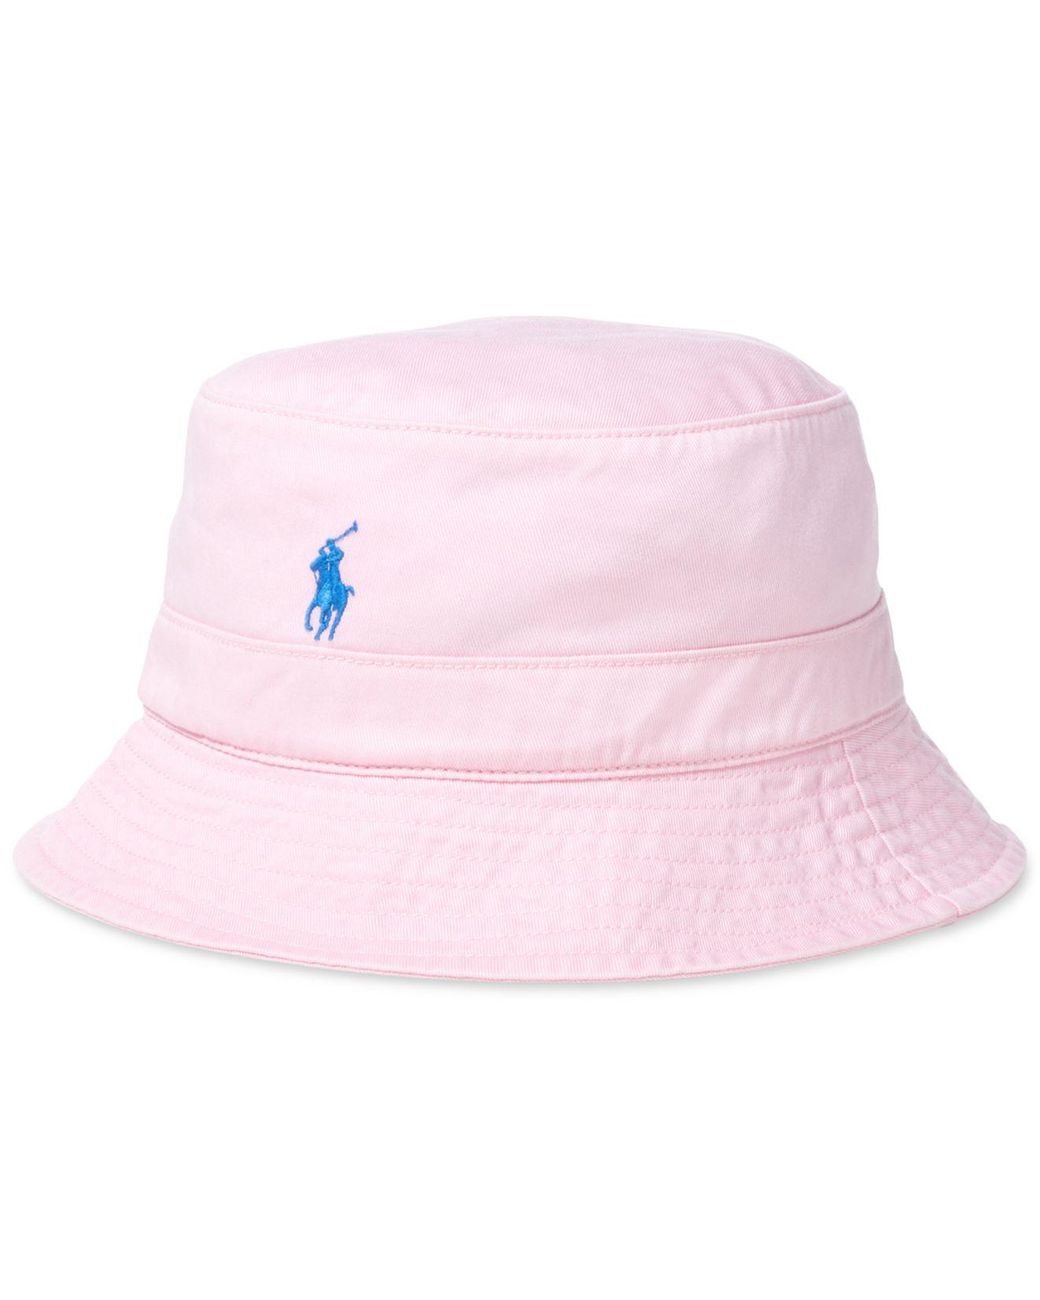 Polo Ralph Lauren Chino Bucket Hat in Pink | Lyst